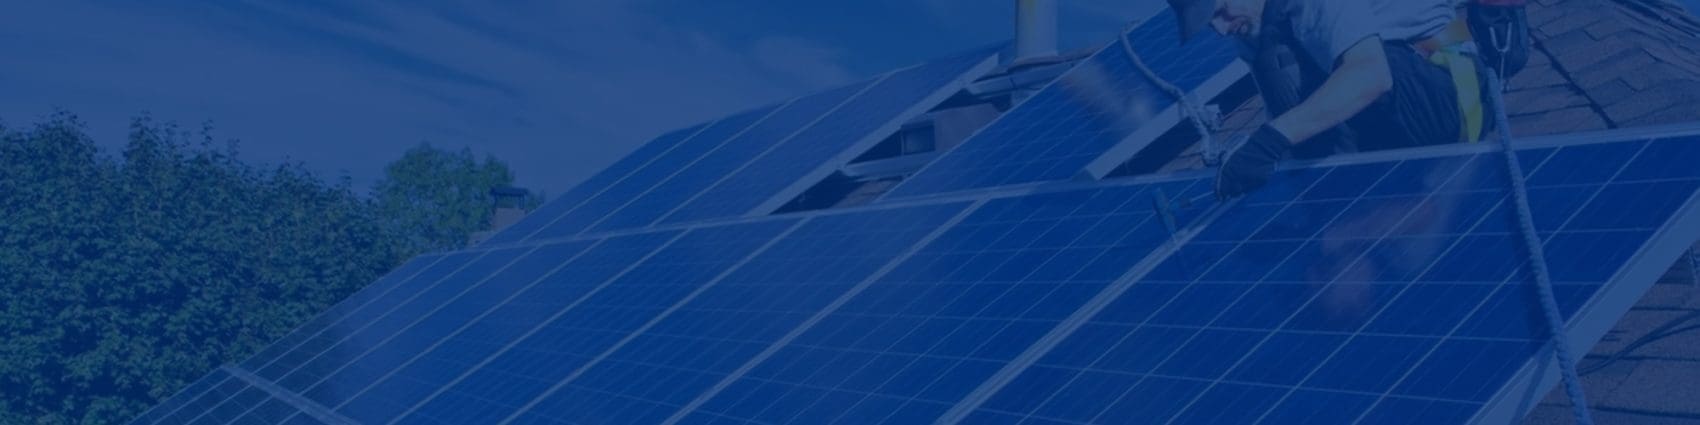 PG&E Net Billing Tariff (NEM 3.0) is Great for Solar and Energy Independence